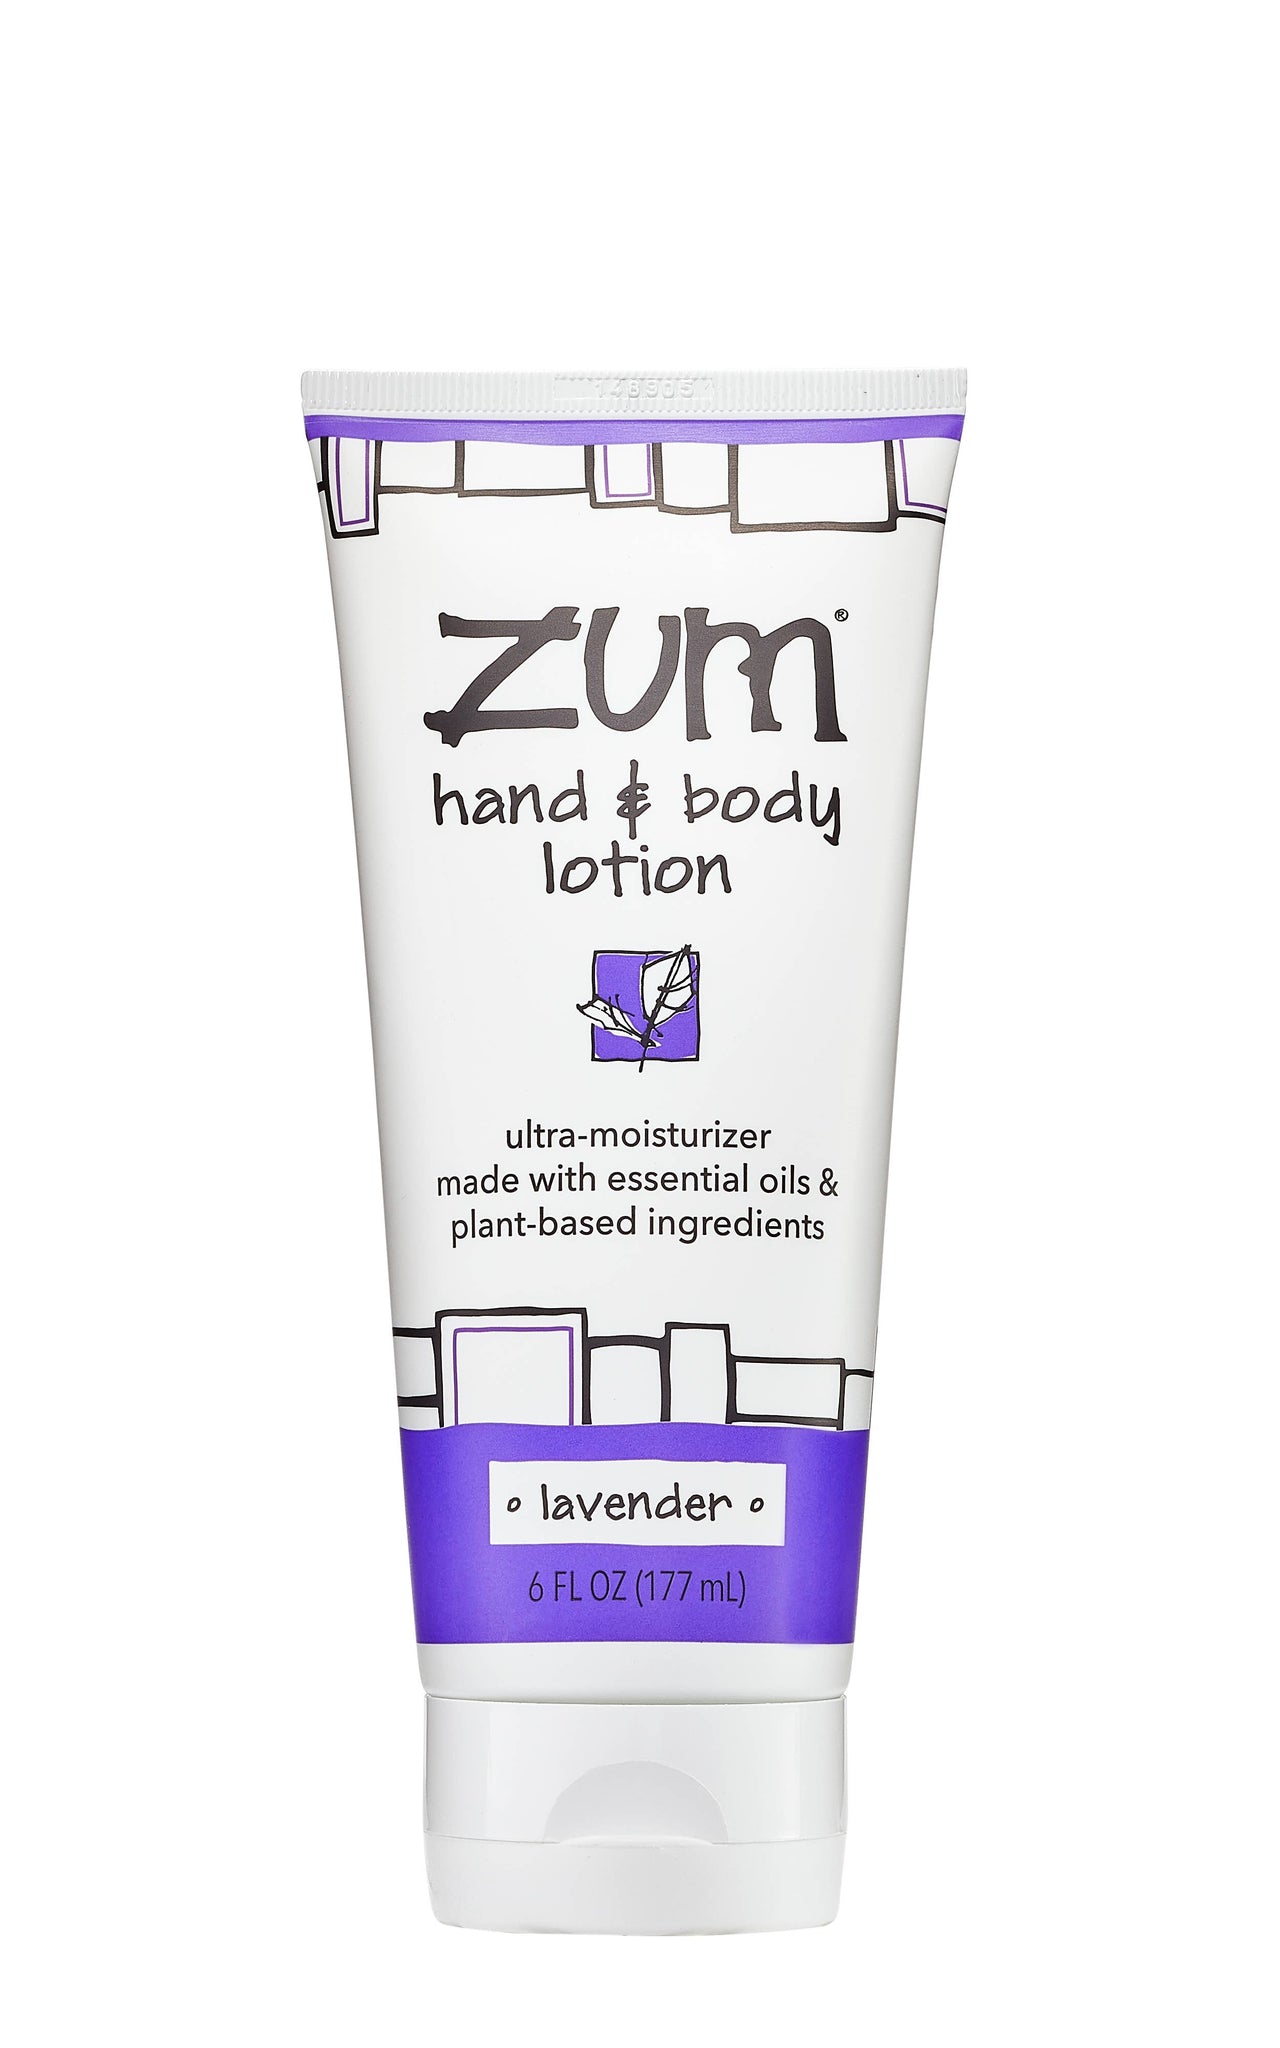 Zum Hand & Body Lotion - Lavender: 6 fz